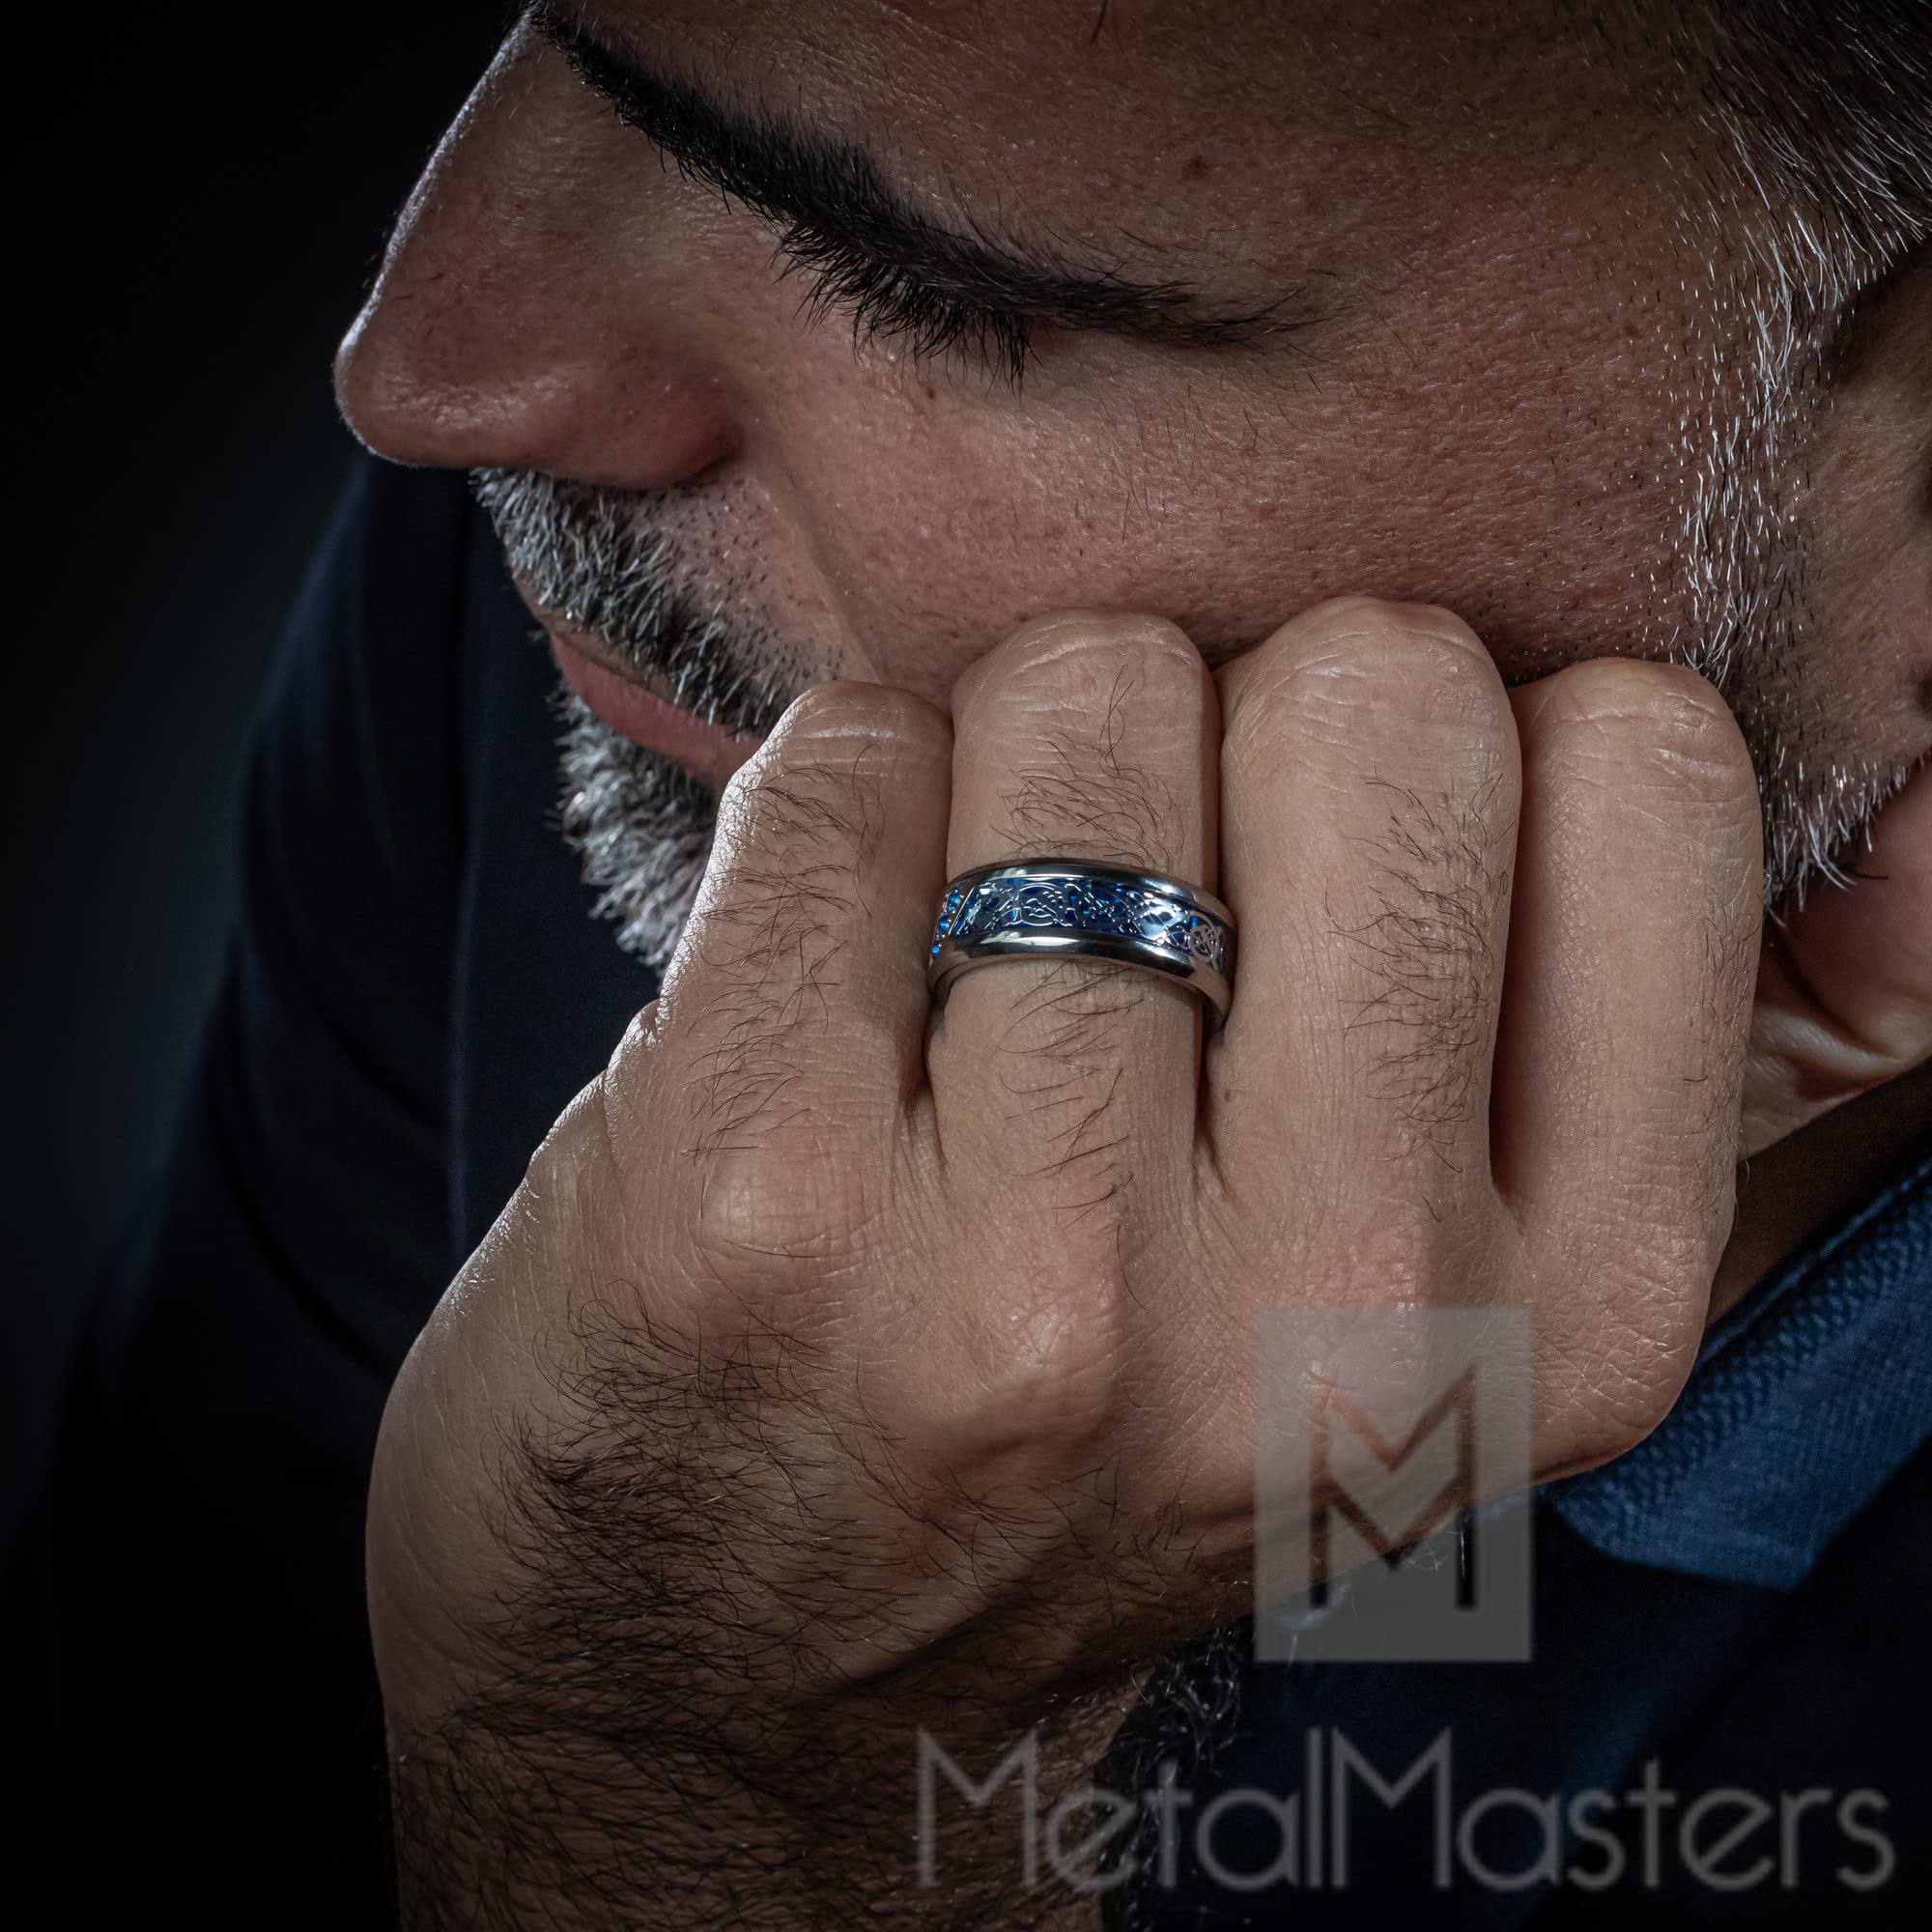 Metal Masters Co. Men's Titanium Wedding Ring Band with Dragon Design Carbon Fiber Inlay Cubic Zirconia